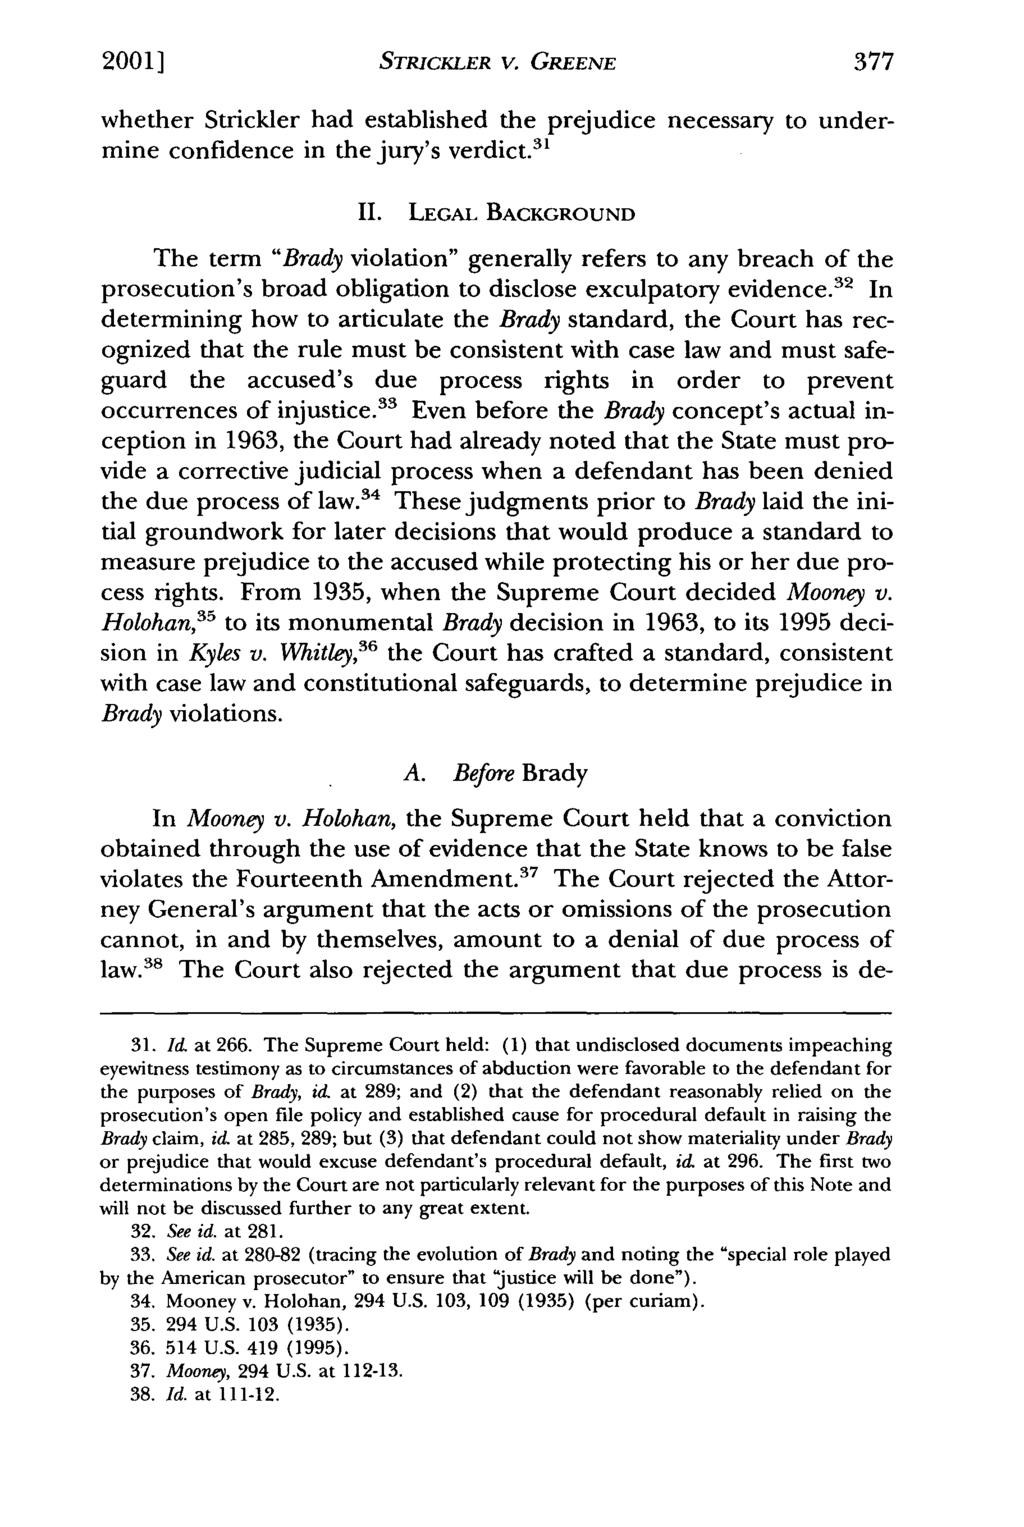 20011 STRICKLER v. GREENE whether Strickler had established the prejudice necessary to undermine confidence in the jury's verdict. 3 II.